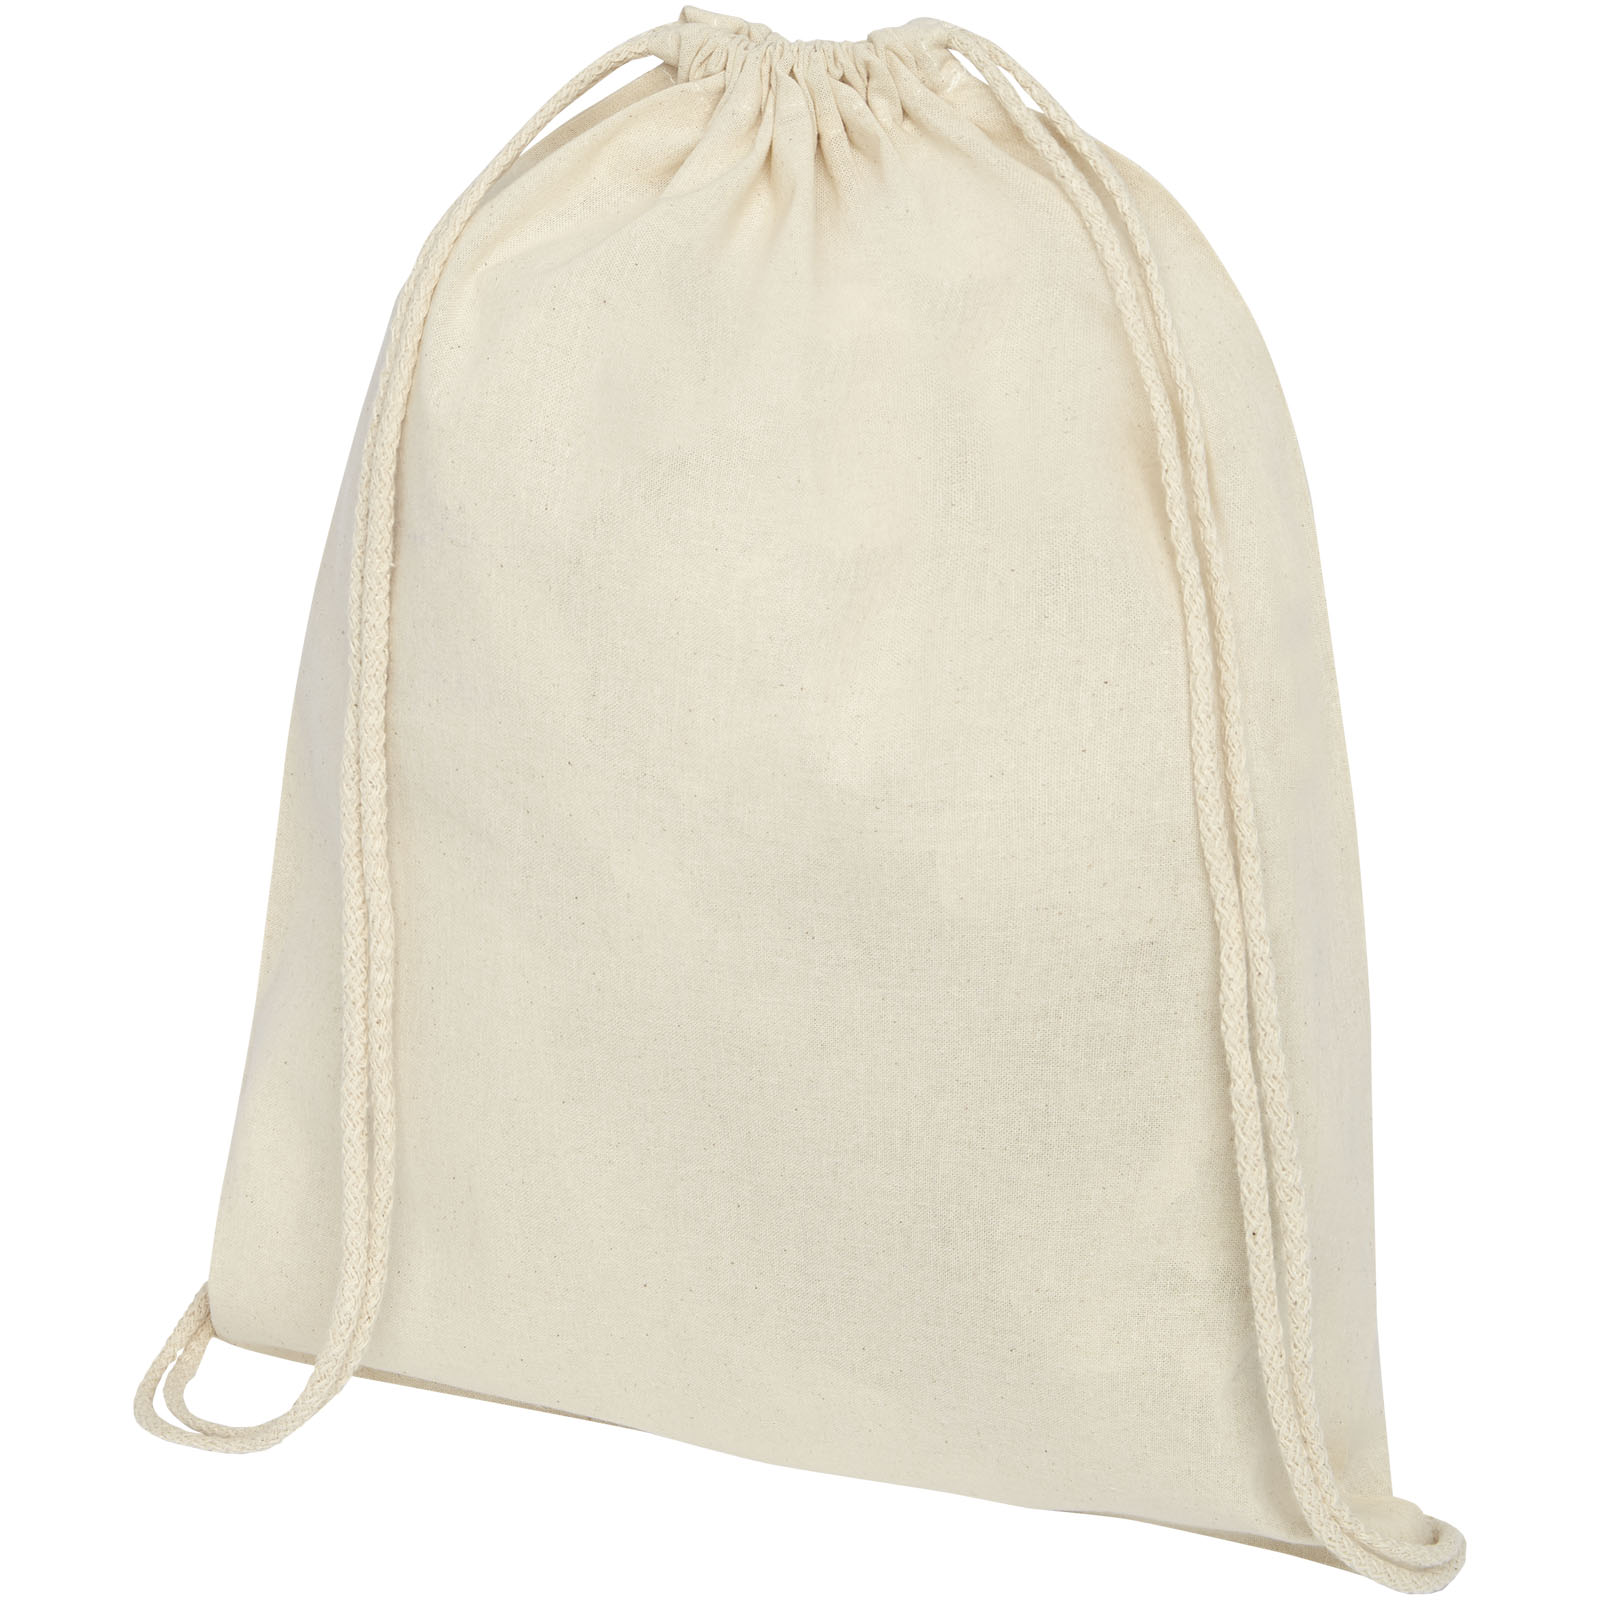 Bags - Oregon 100 g/m² cotton drawstring bag 5L